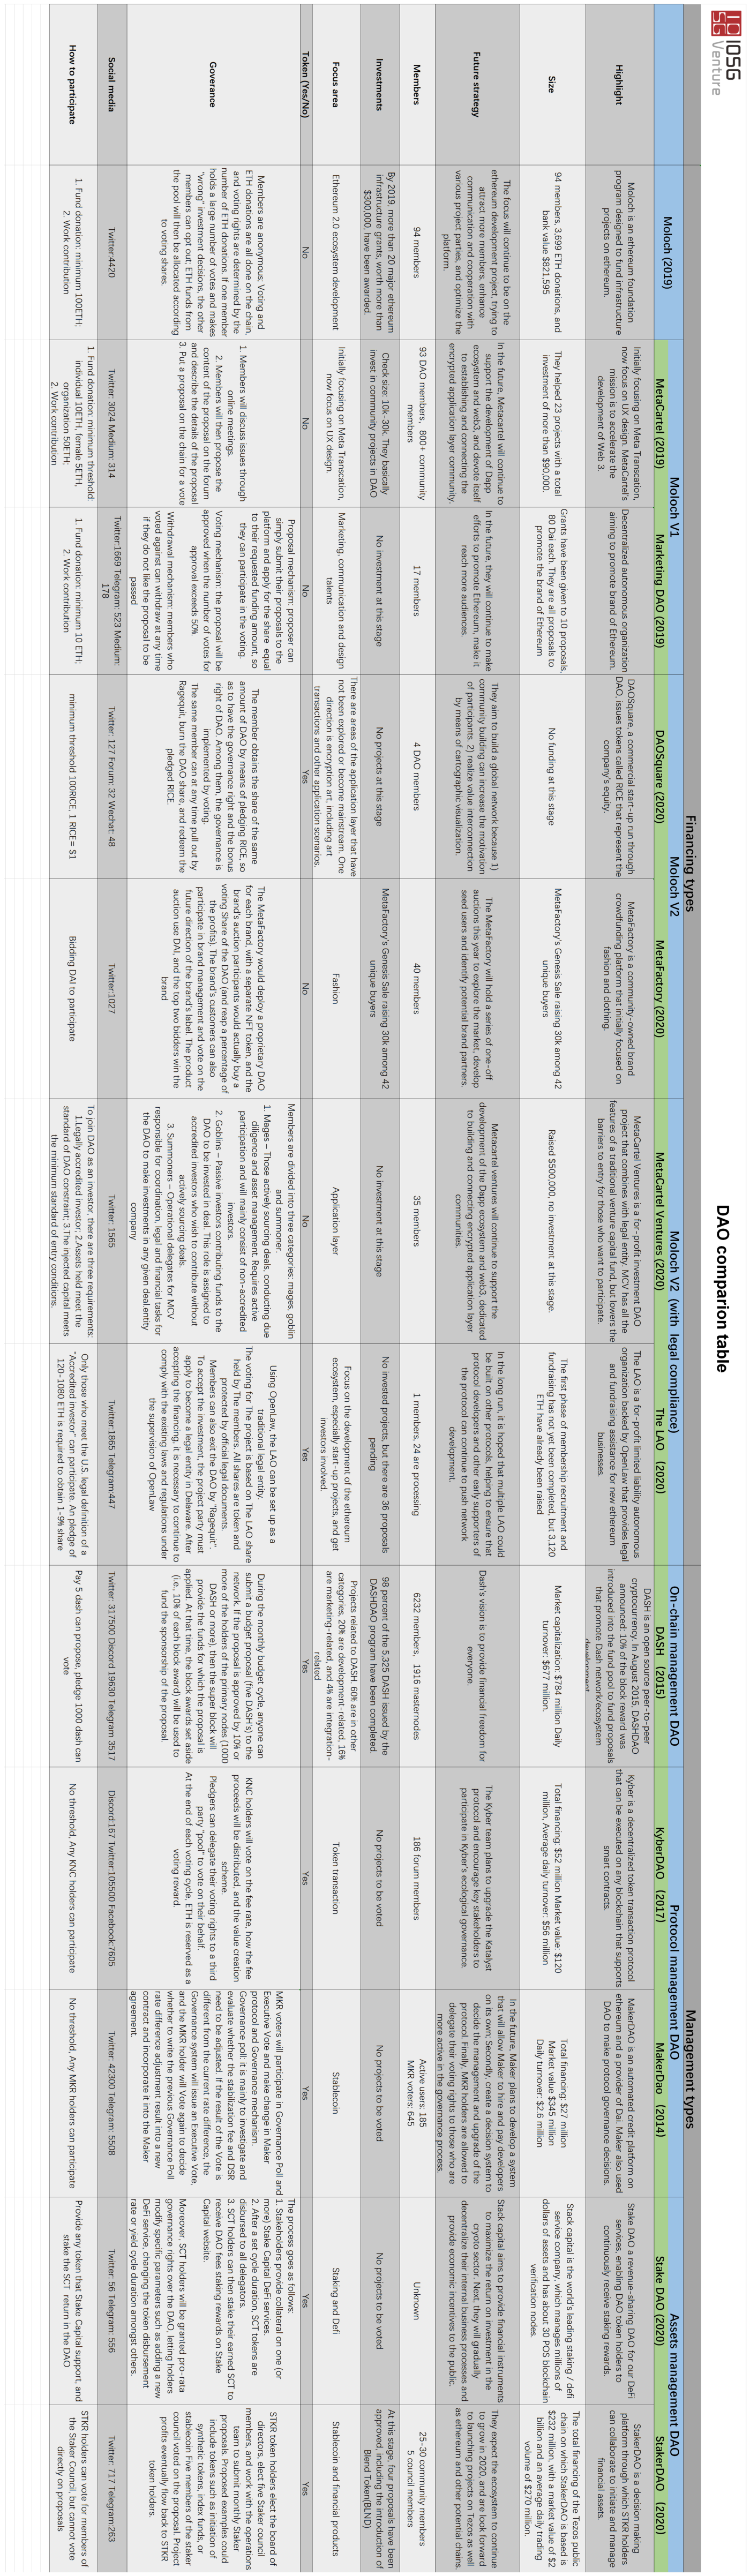 Figure 3: DAO Comparison table, Source: IOSG Ventures